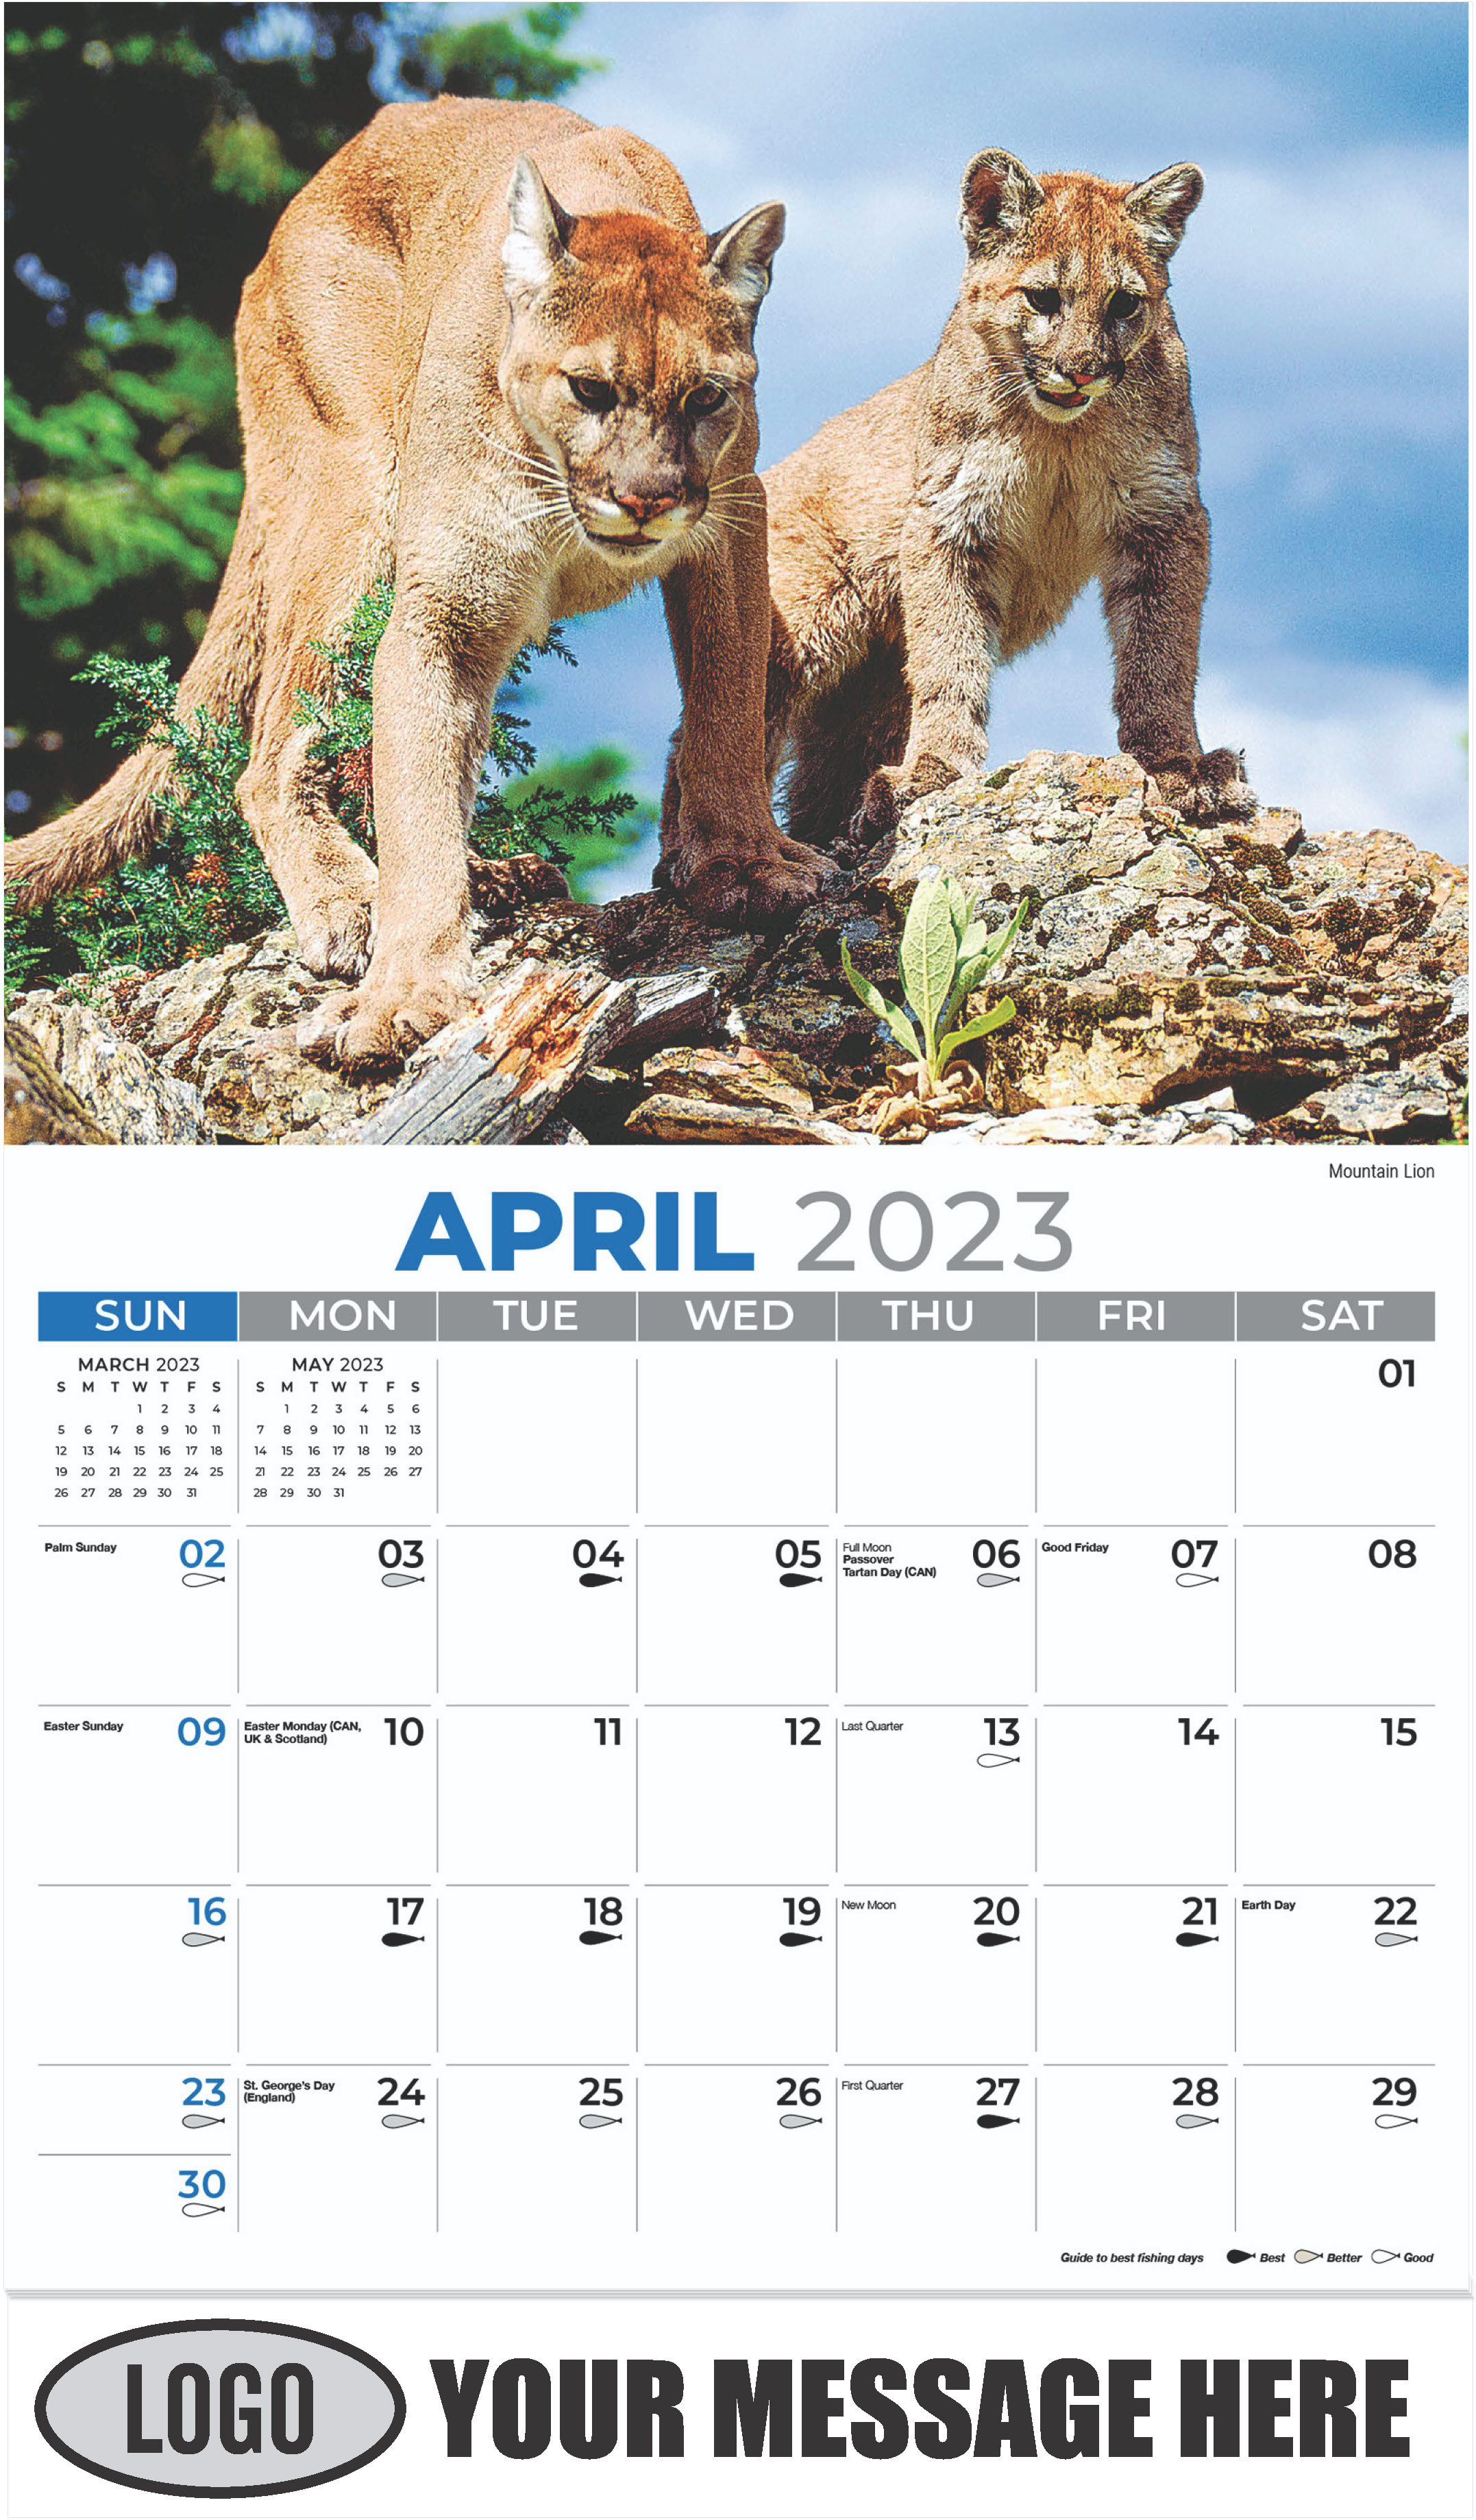 Mountain Lion - April - North American Wildlife 2023 Promotional Calendar